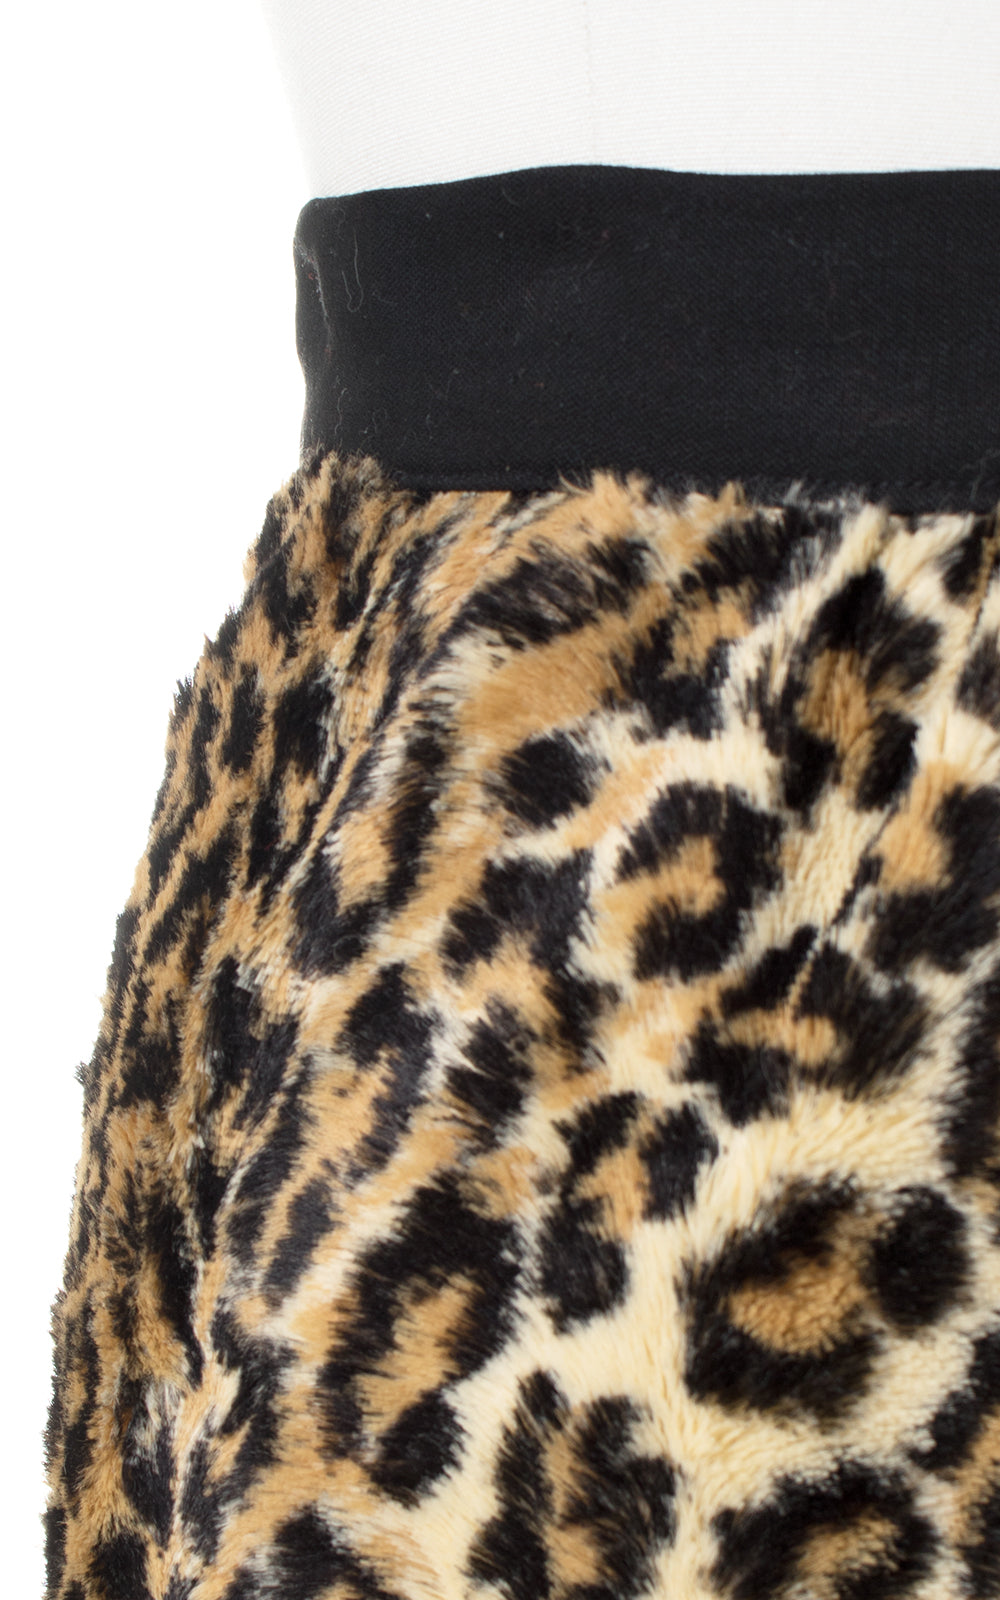 1960s Leopard Print Faux Fur Skirt with Slit